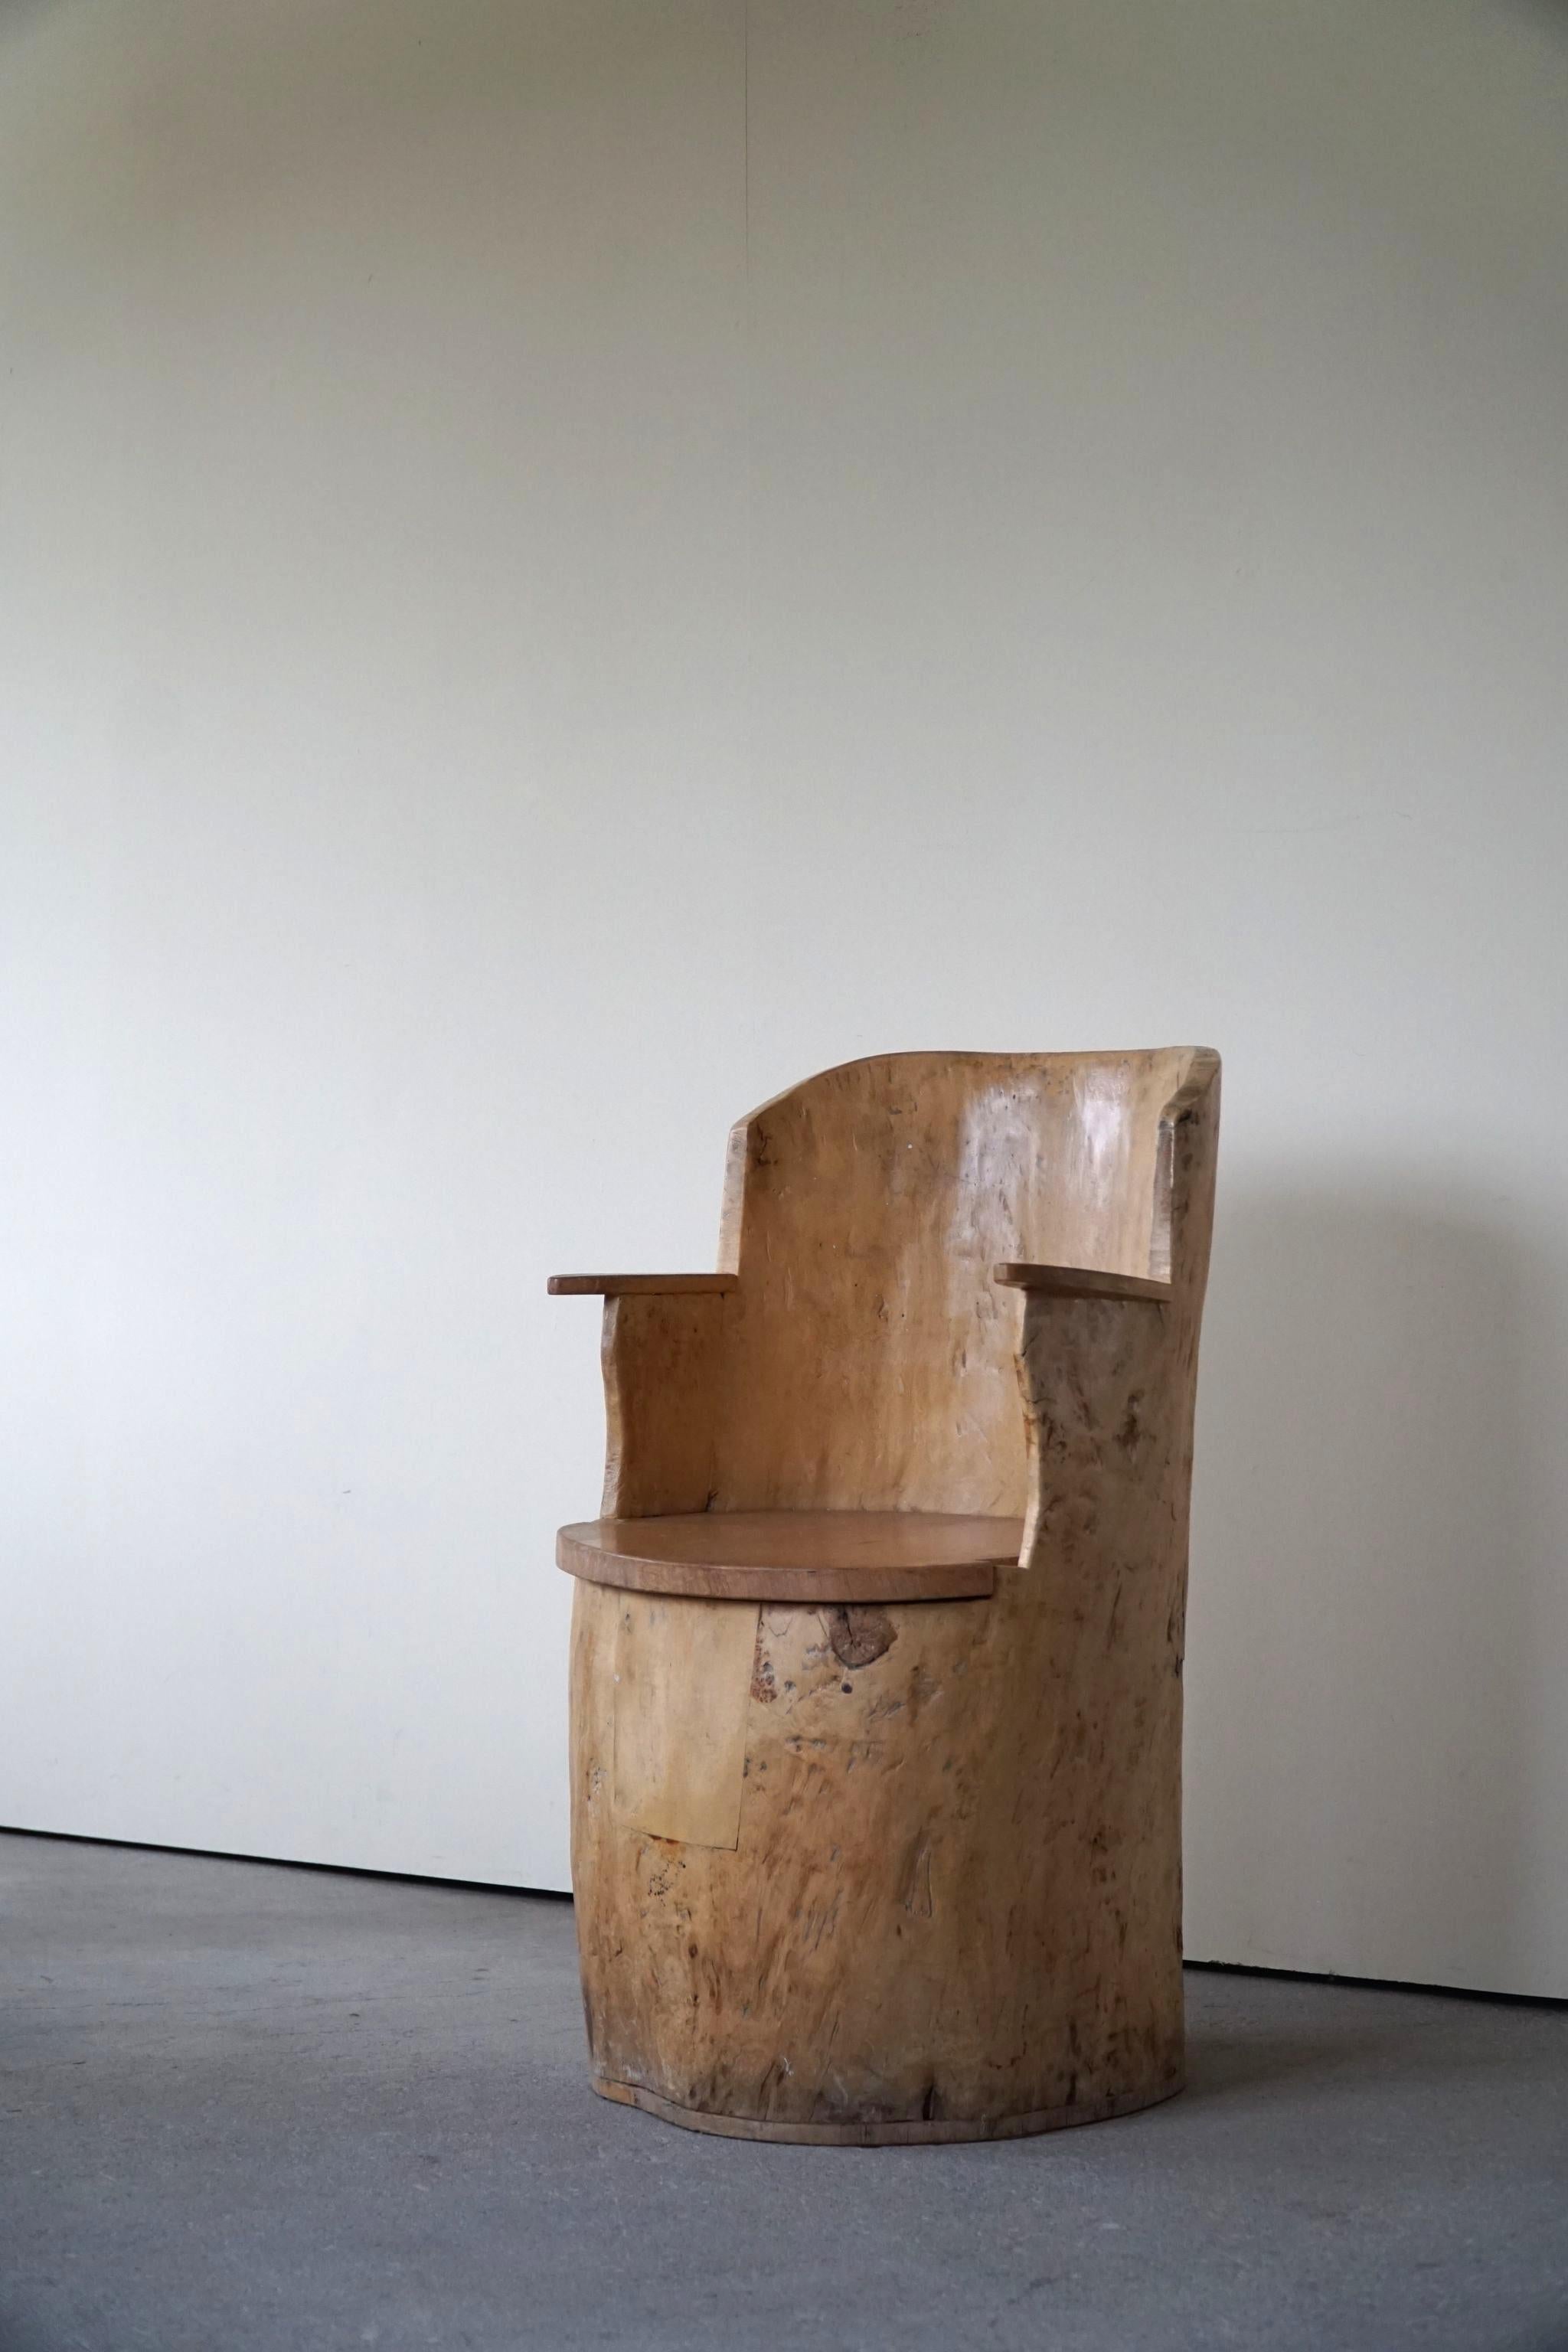 Wabi Sabi Stump Chair in Solid Birch, by a Swedish Cabinetmaker, Modern, 1950s For Sale 5